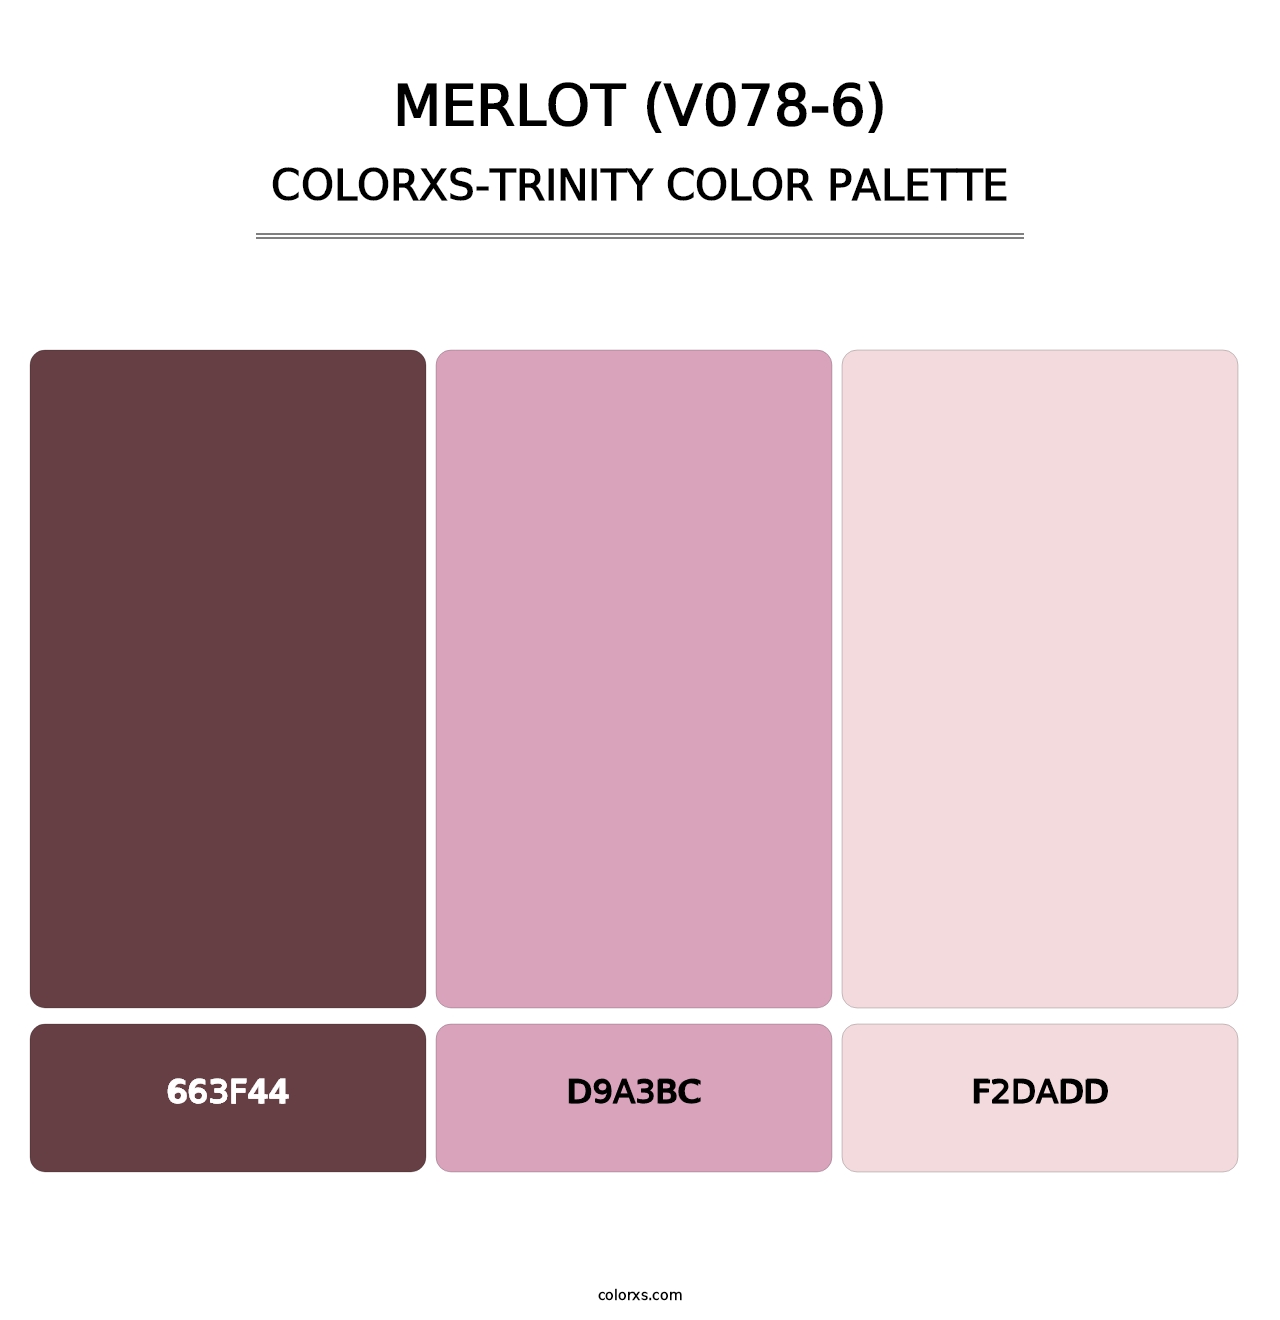 Merlot (V078-6) - Colorxs Trinity Palette